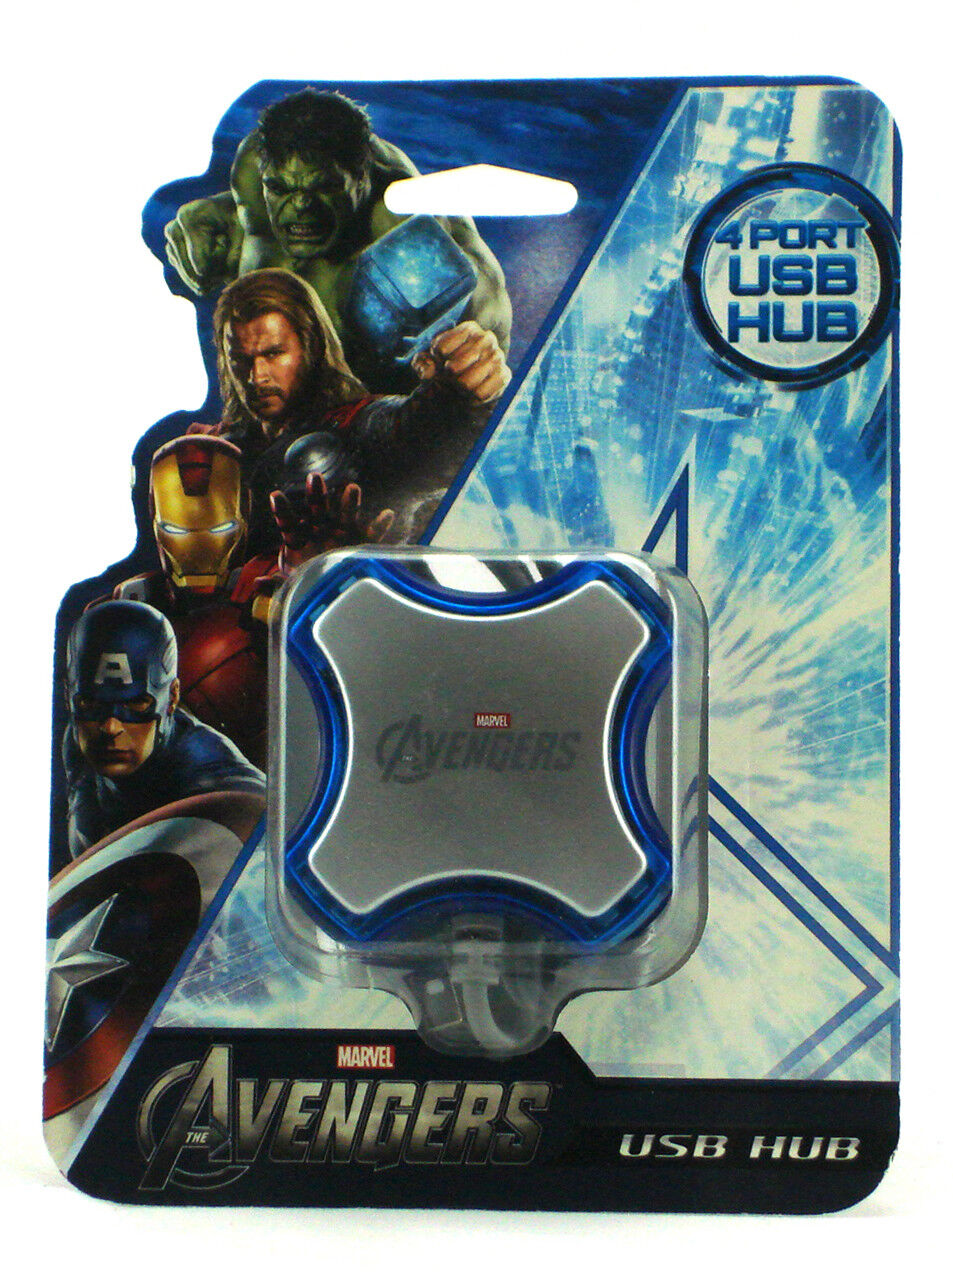 Avengers 4 Port USB Device Hub Marvel Comics Universe Sealed Brand New